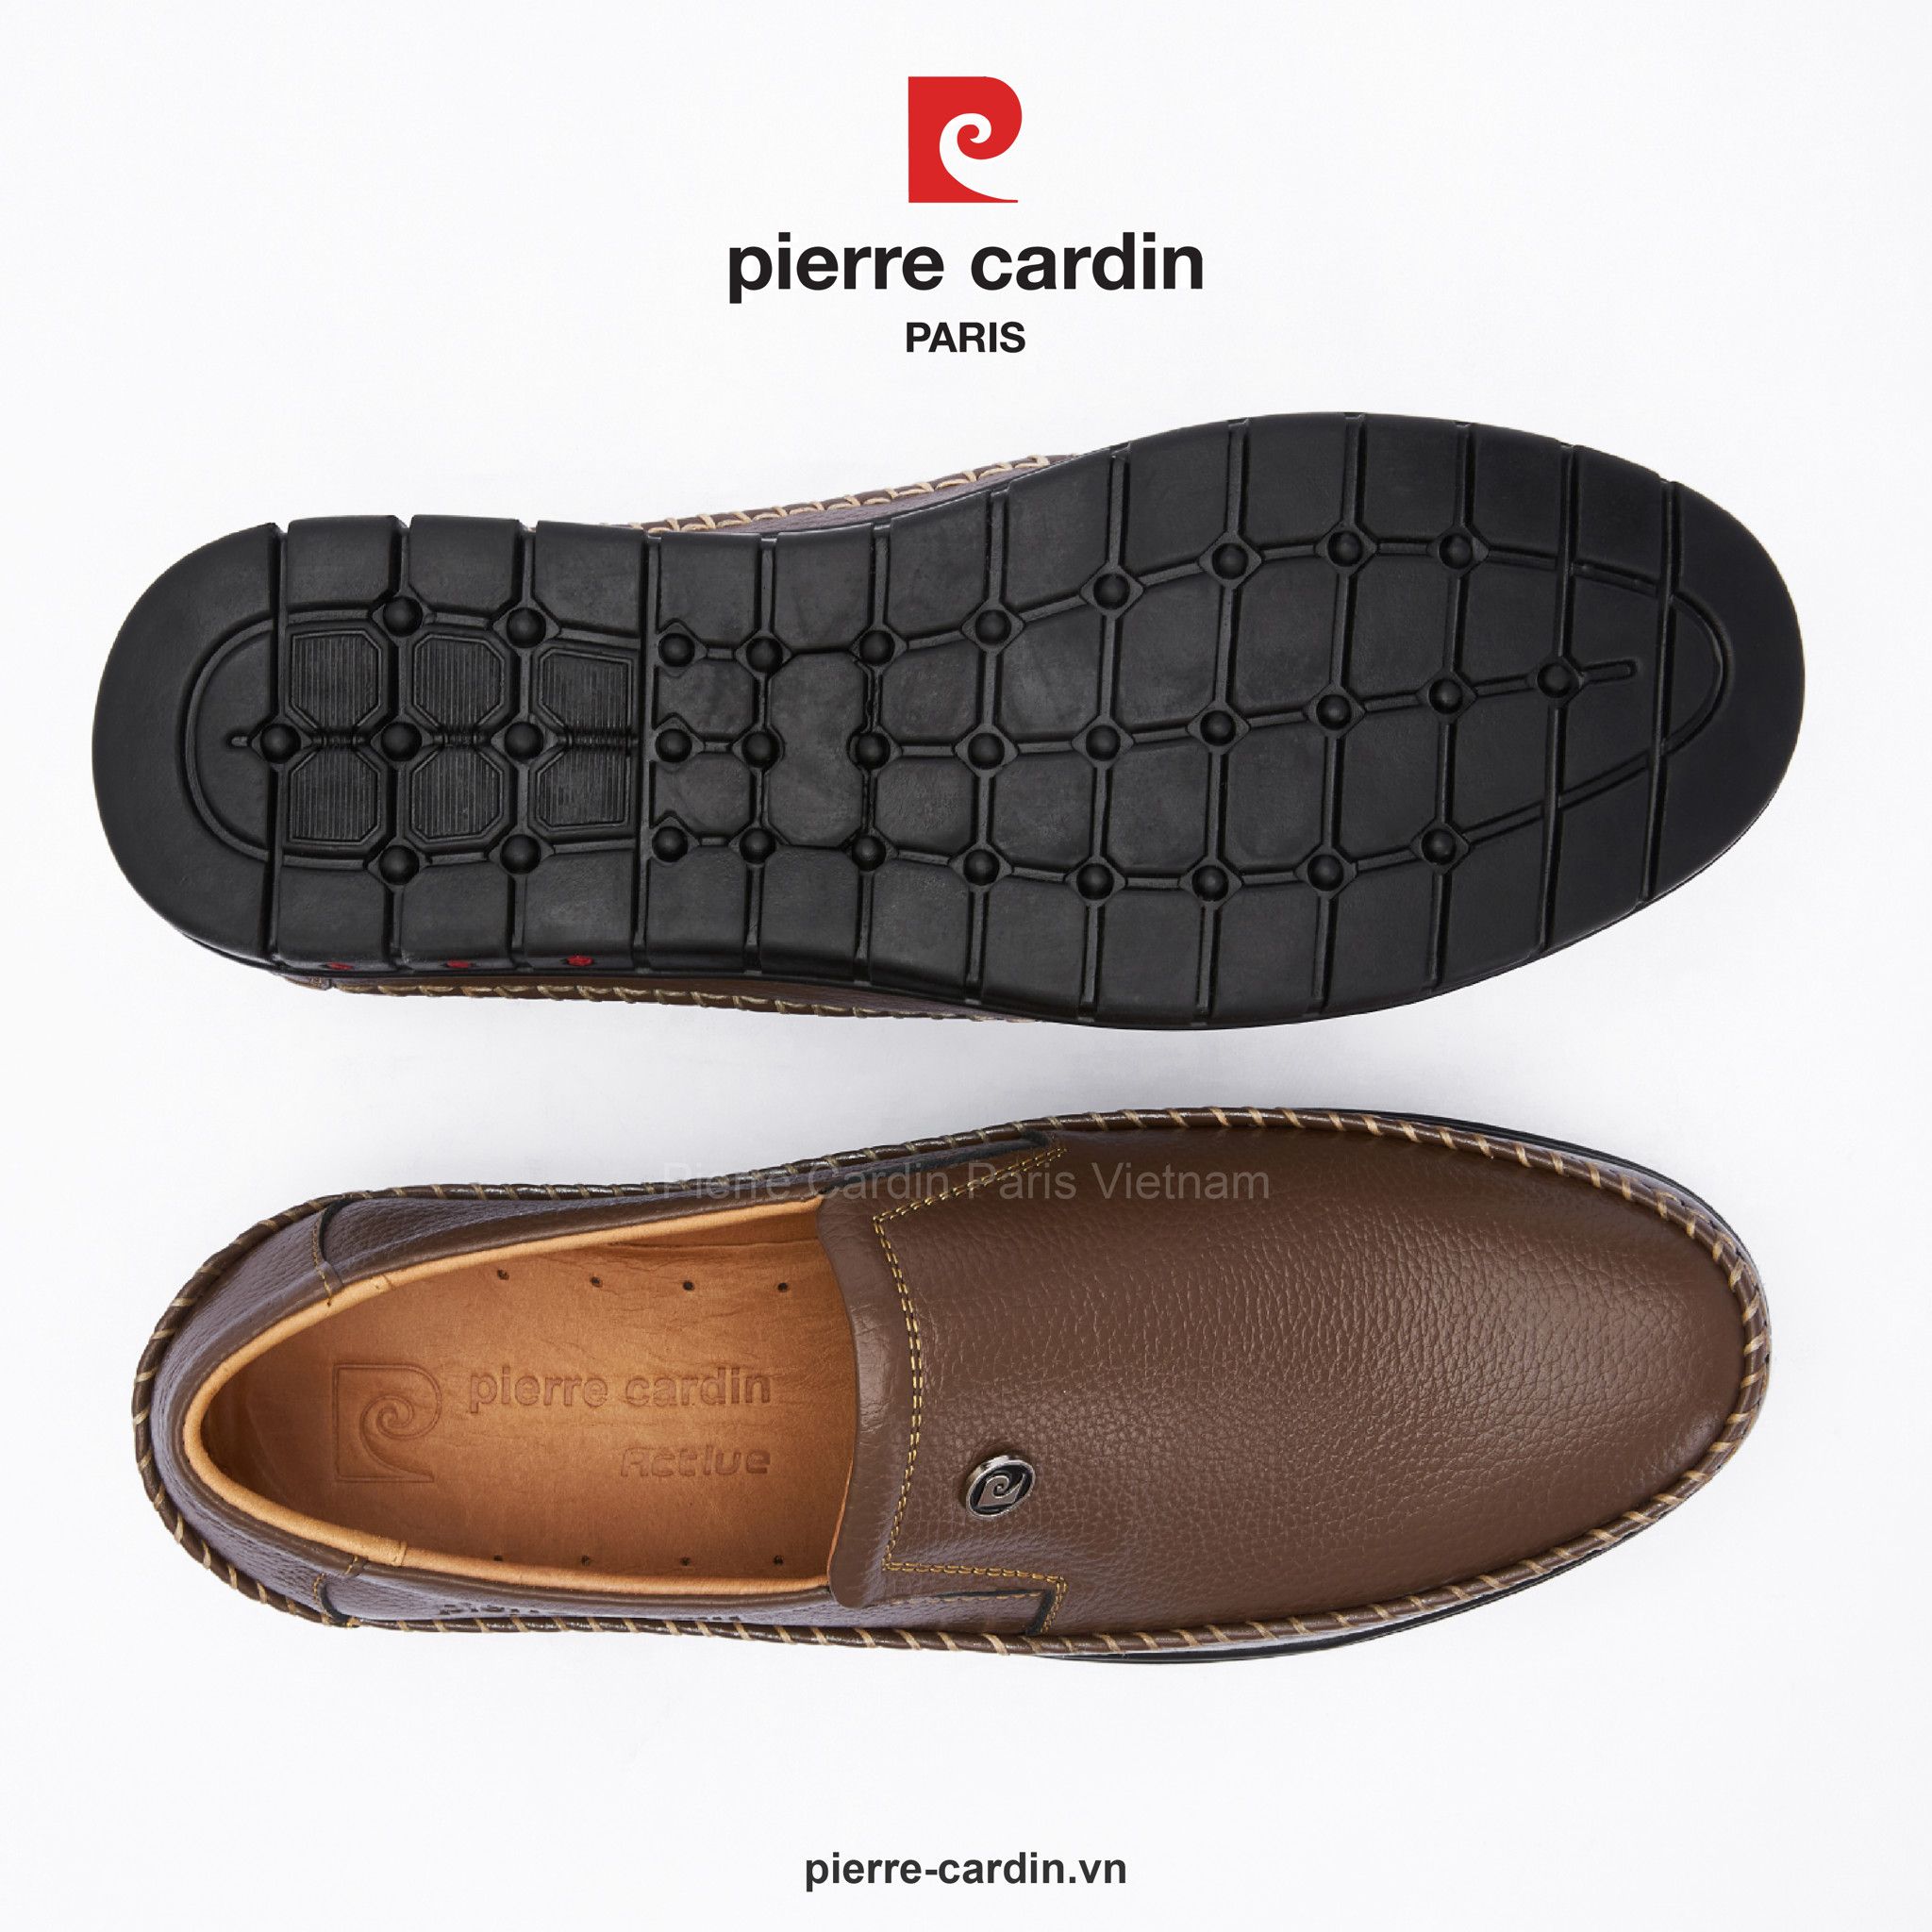 Pierre Cardin Paris Vietnam: Black Loafer - PCMFWLG 083